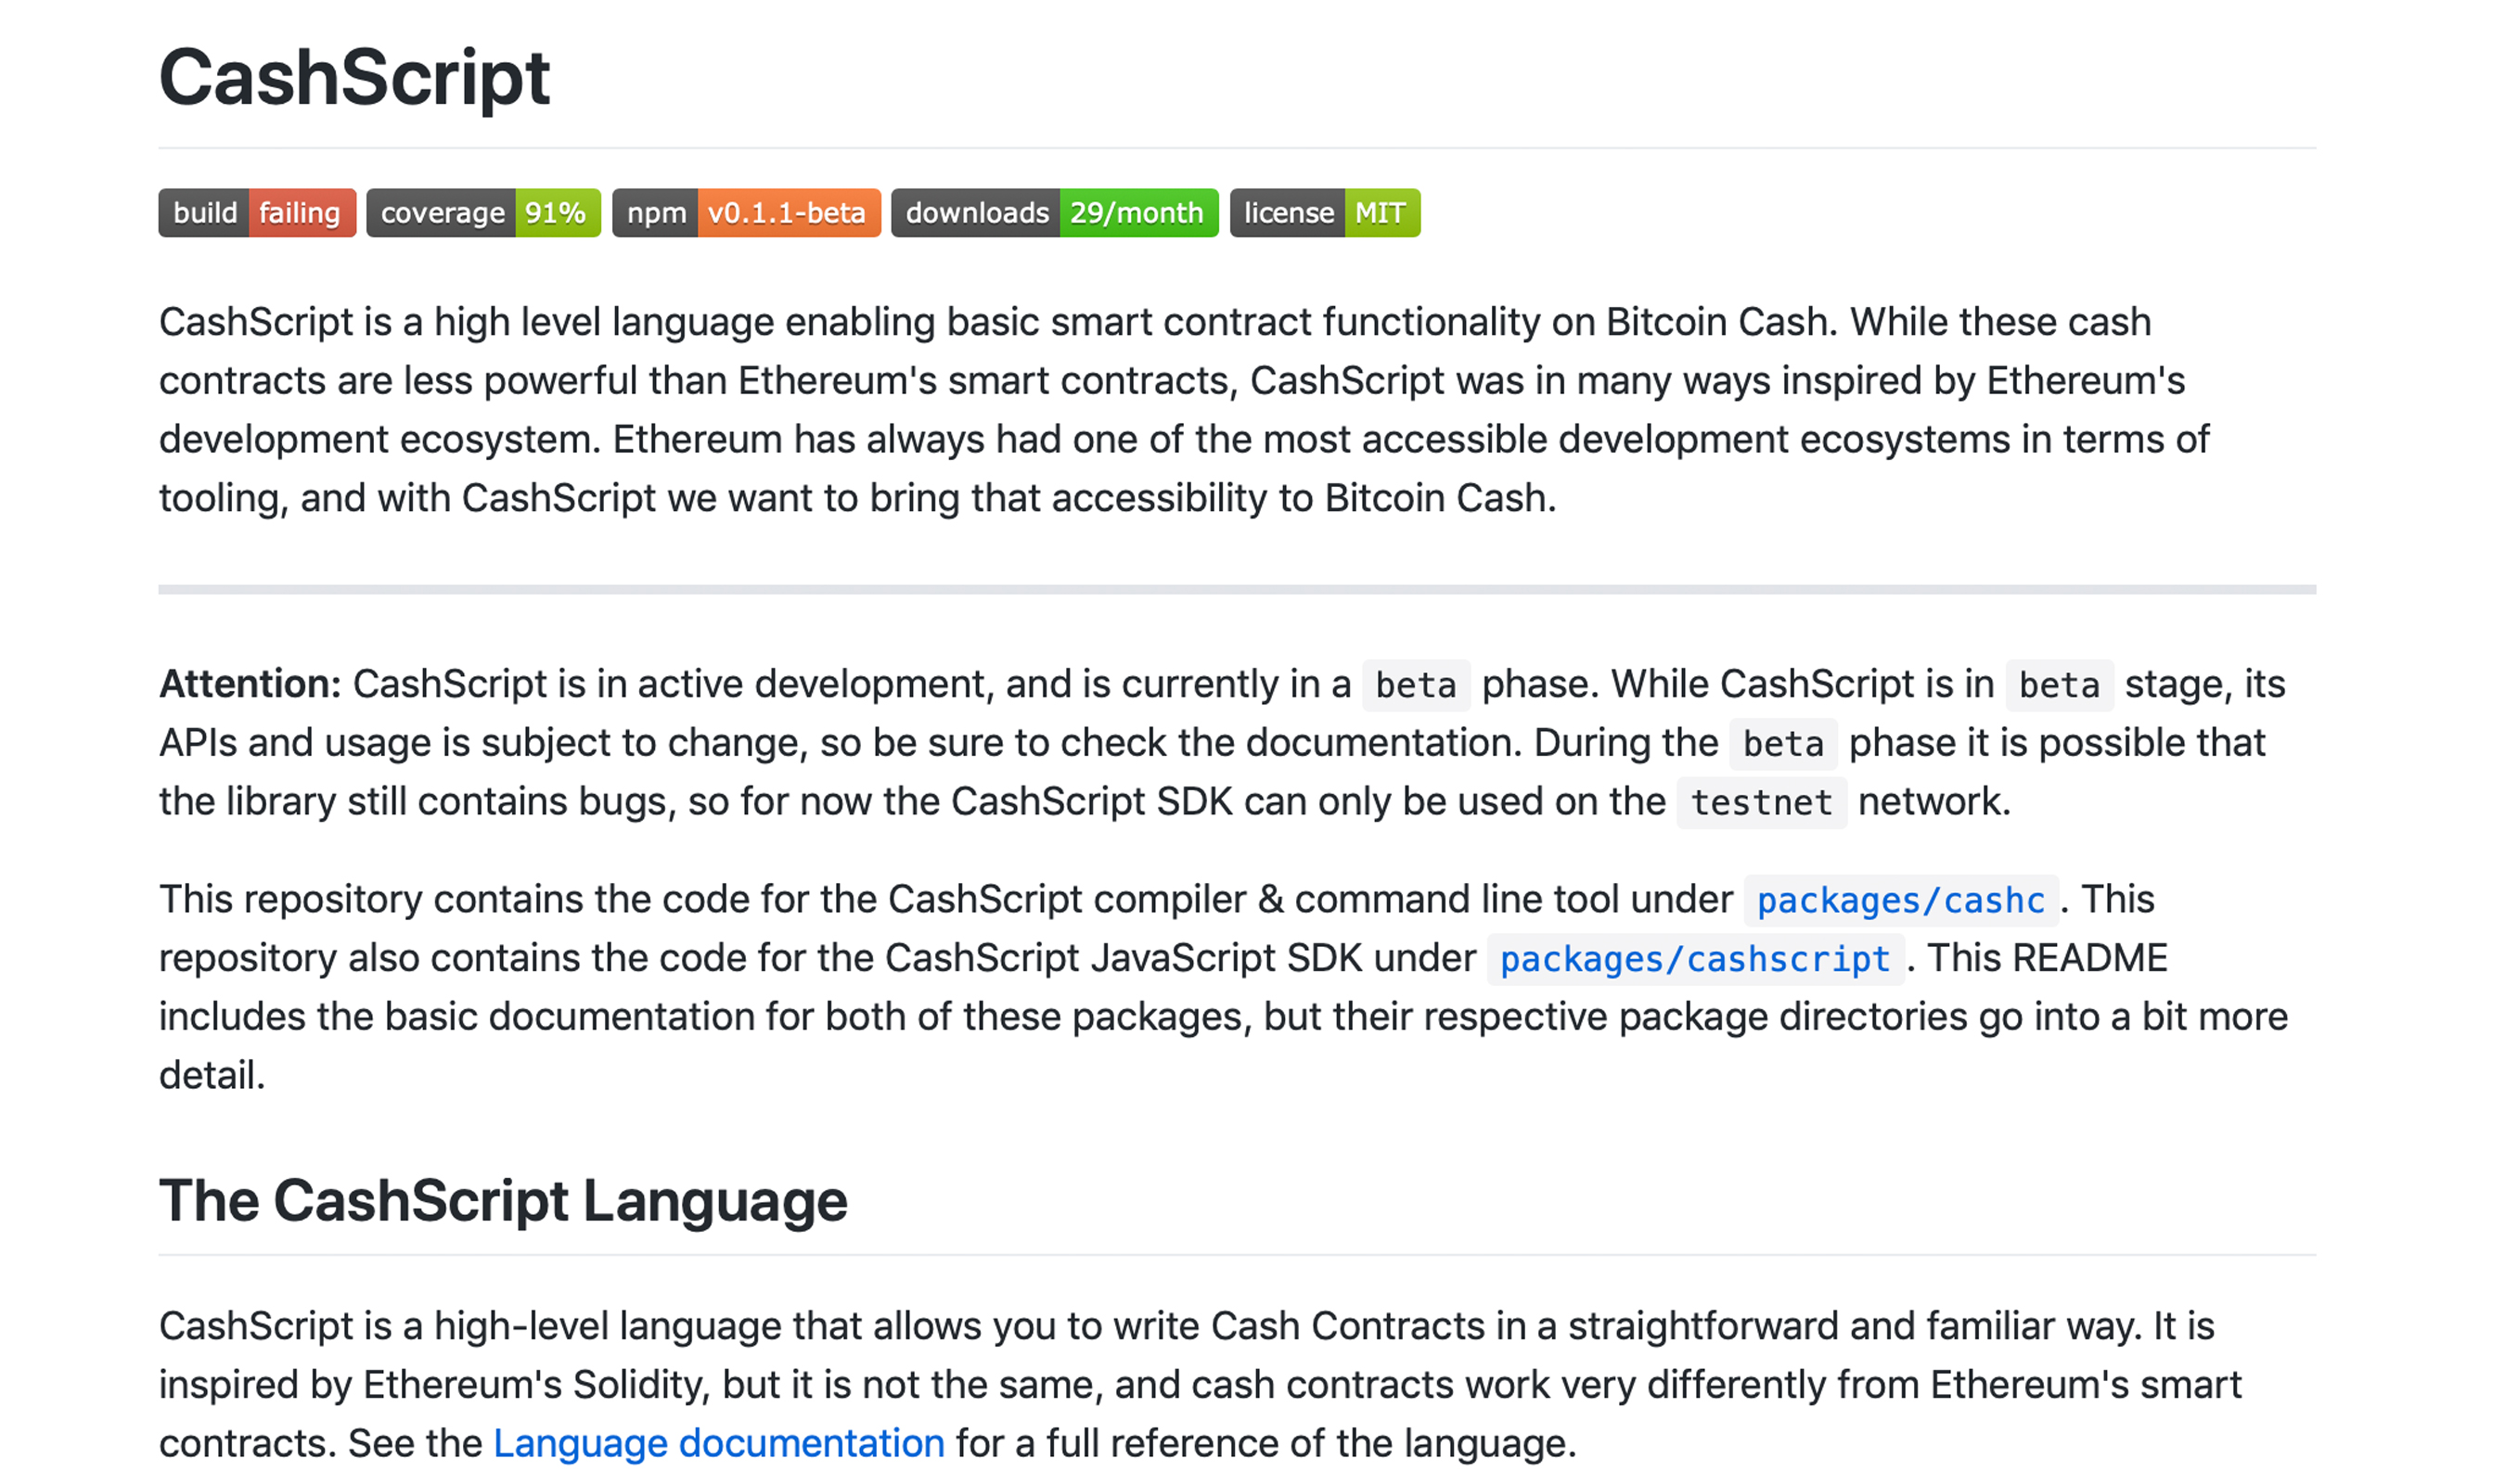 Bitcoin Cash Innovation Accelerates With Cashscript High-Level Language 